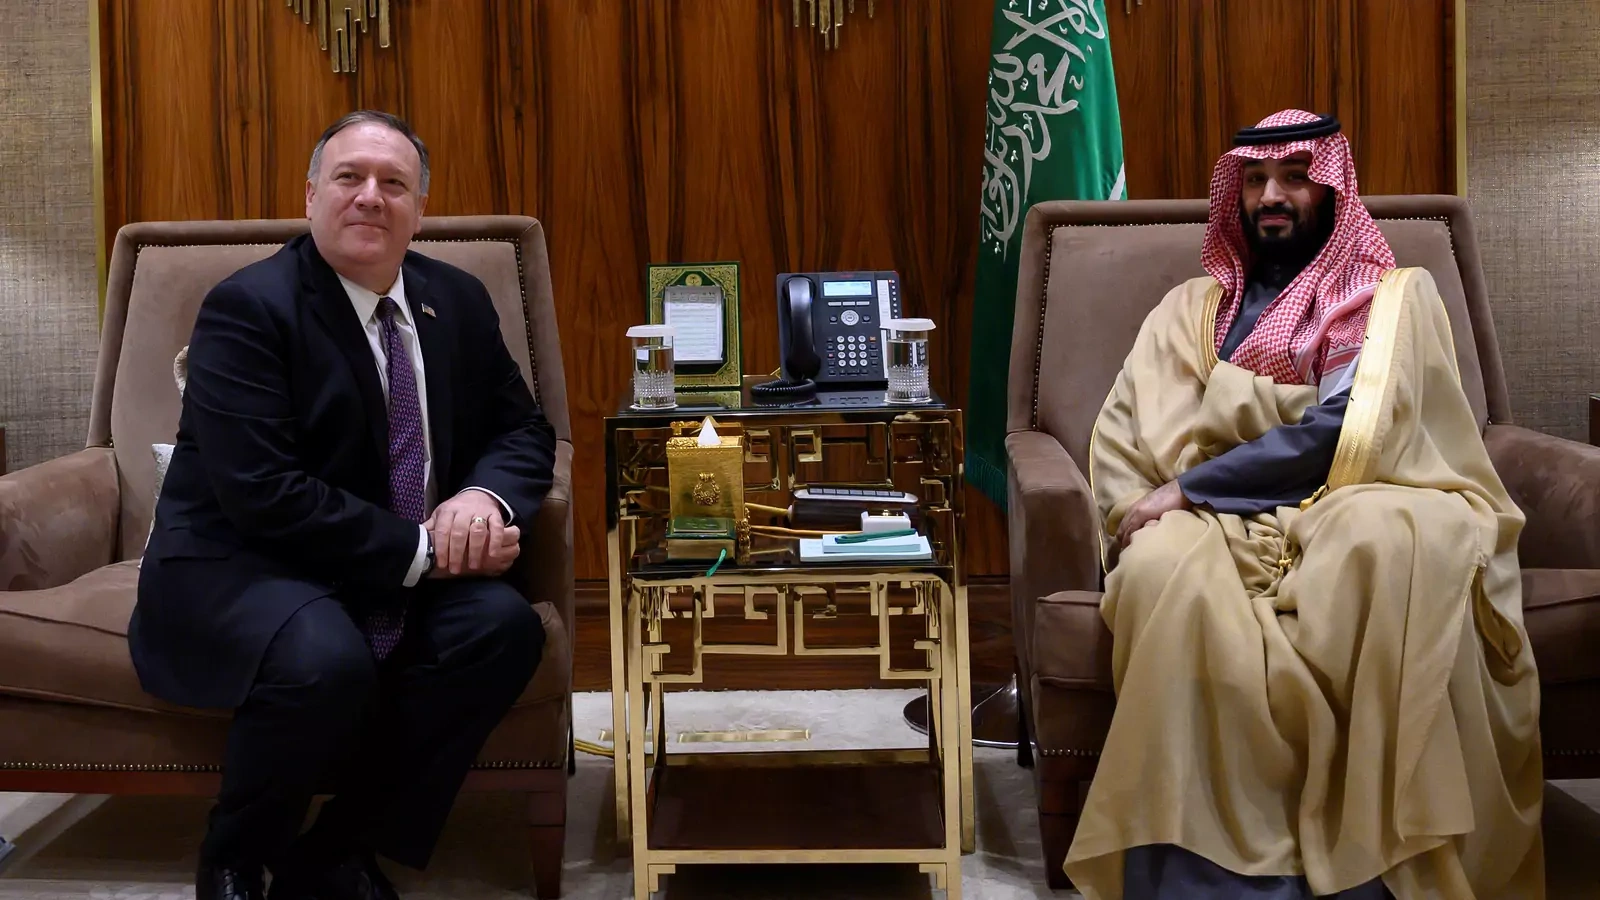 U.S. Secretary of State Mike Pompeo meets with Saudi Arabia's Crown Prince Mohammed bin Salman at Irqah Palace in Riyadh, Saudi Arabia February 20, 2020.